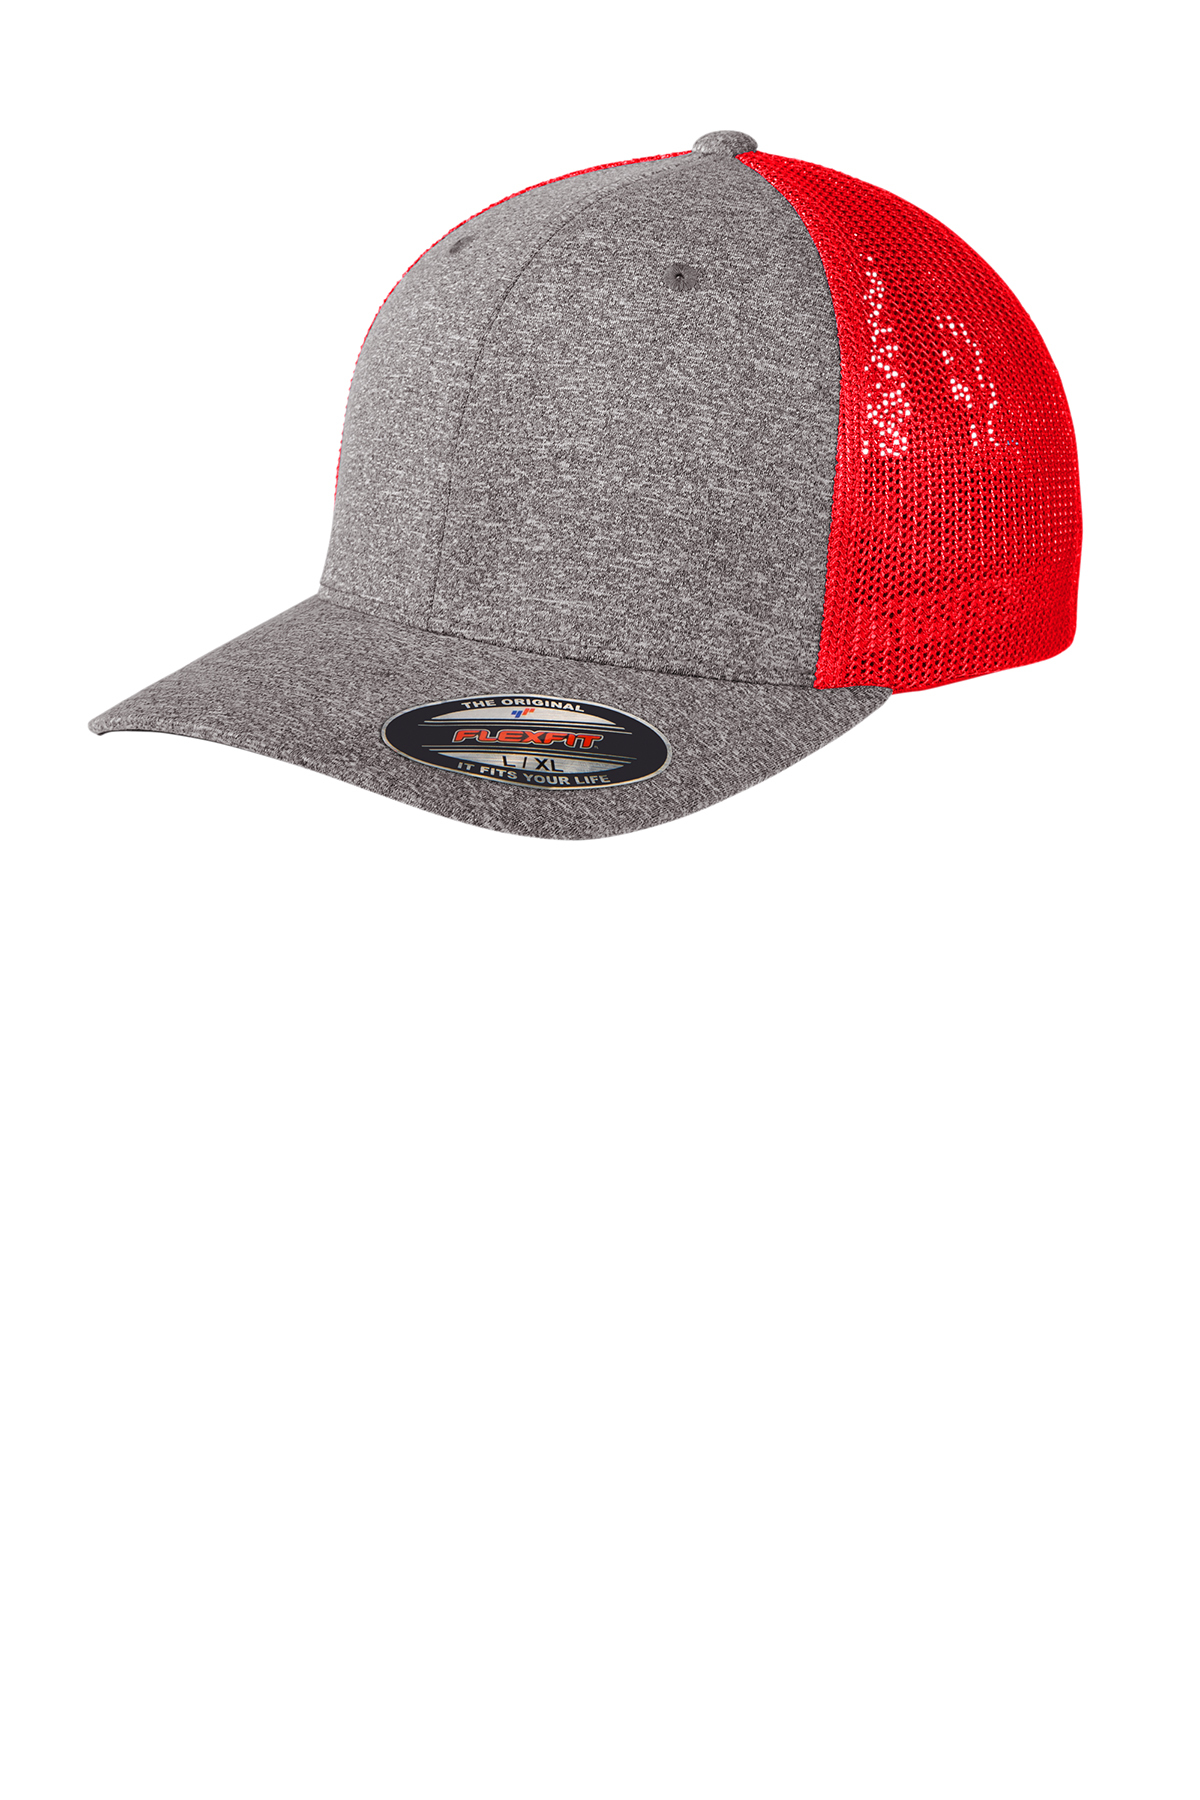 C302 Back Port Flexfit Authority - Cap - Headwear $9.01 Melange Mesh Trucker